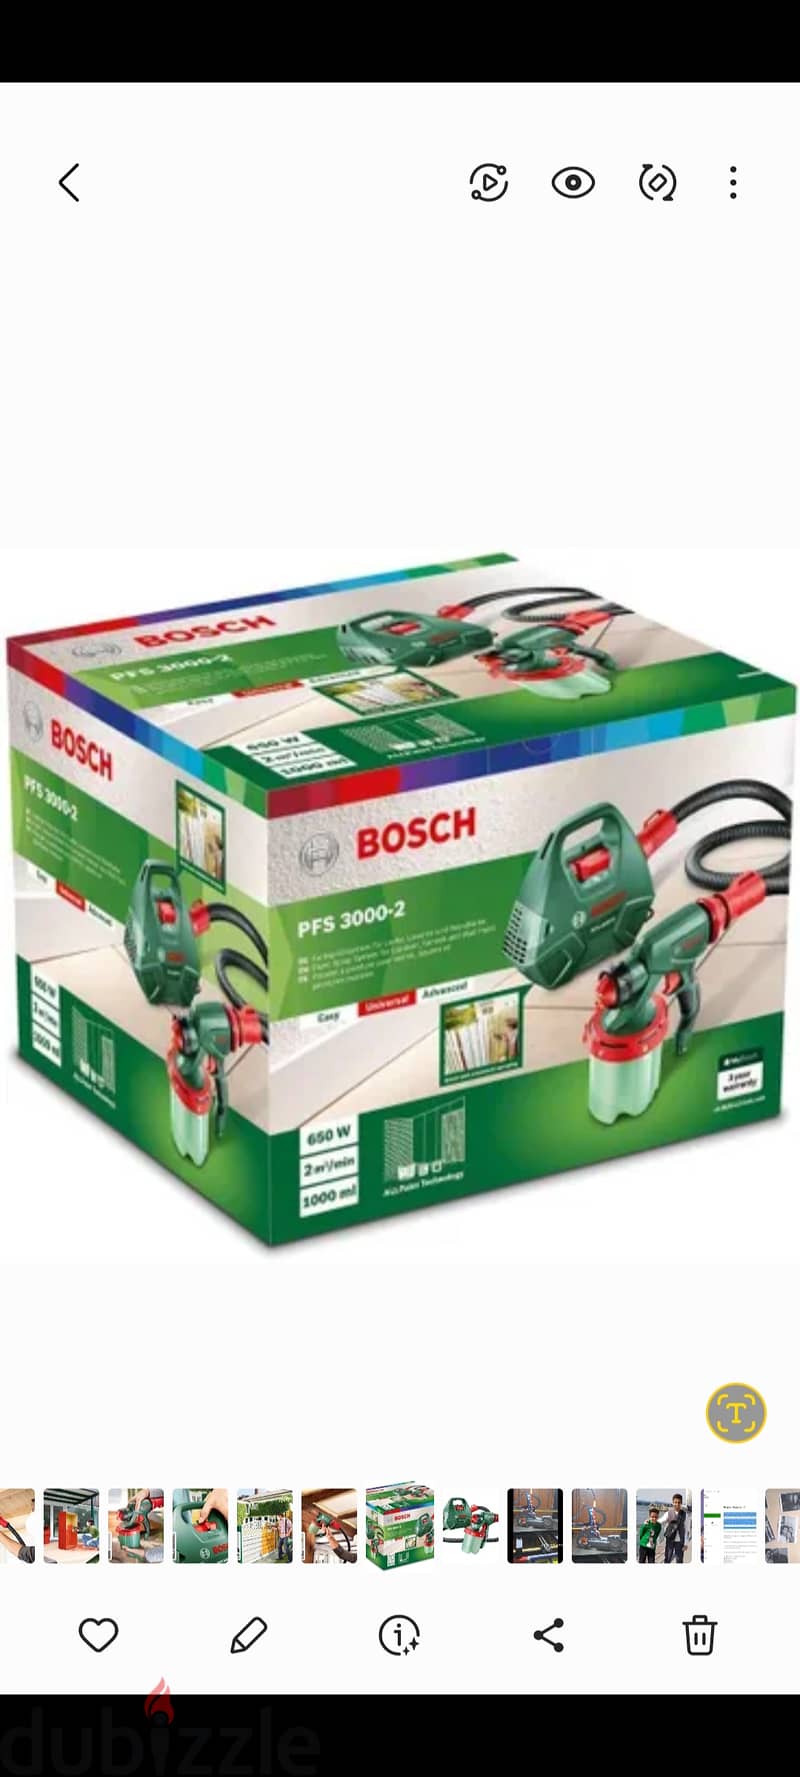 Bosch spray painter 5